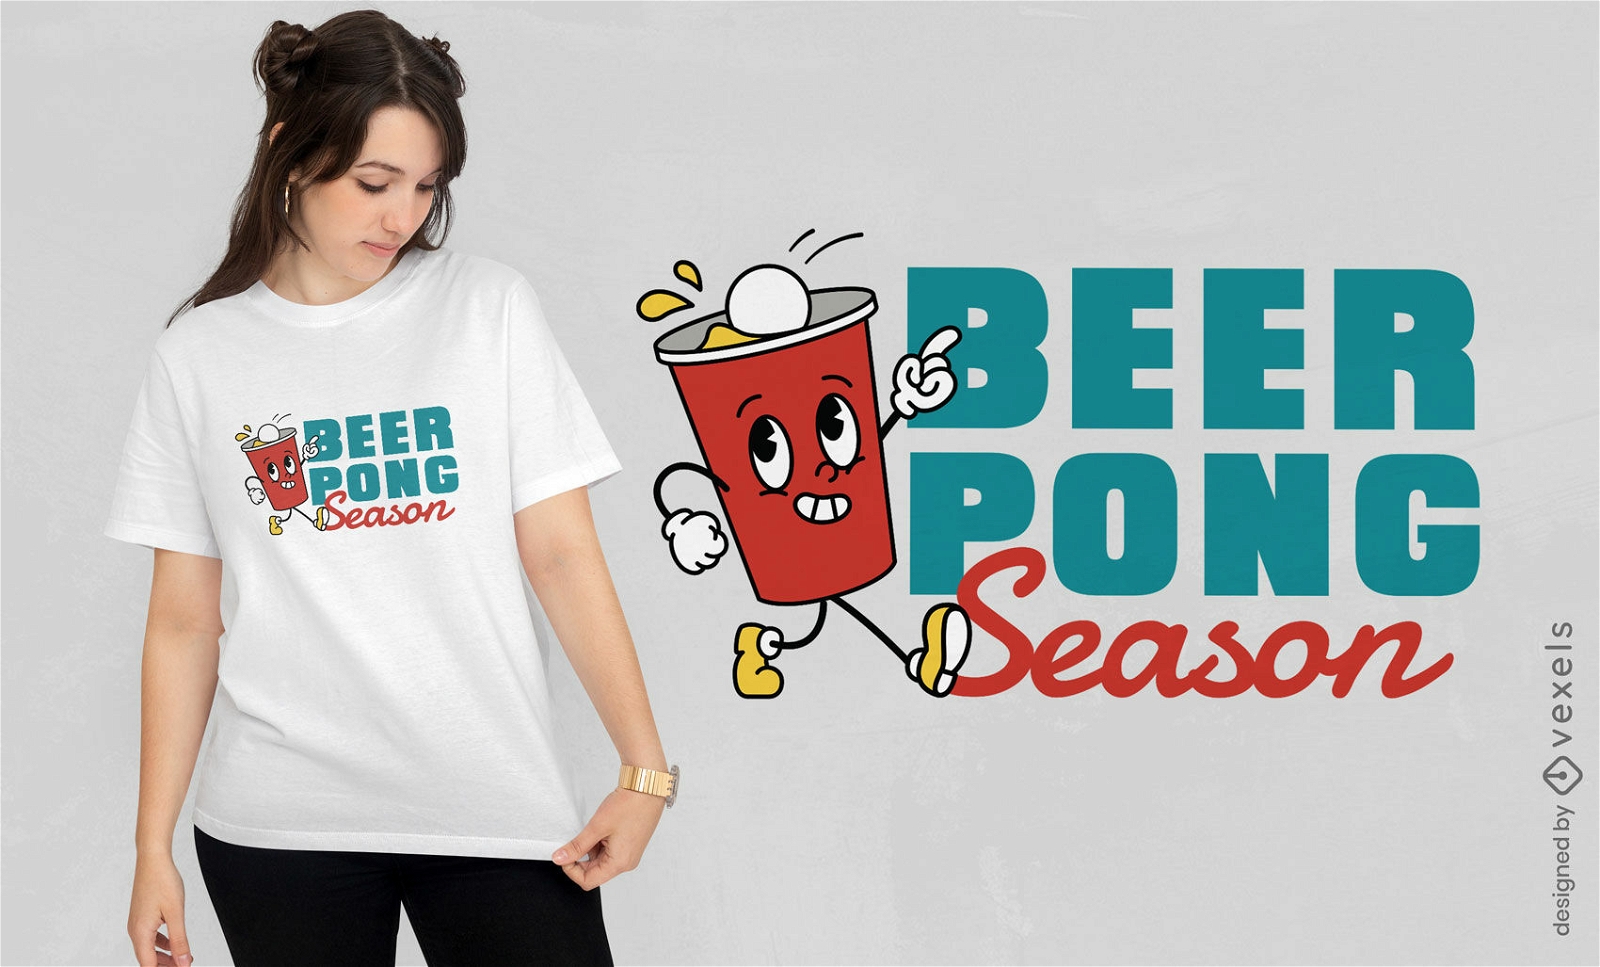 Lustiges T-Shirt-Design f?r die Bier-Pong-Saison